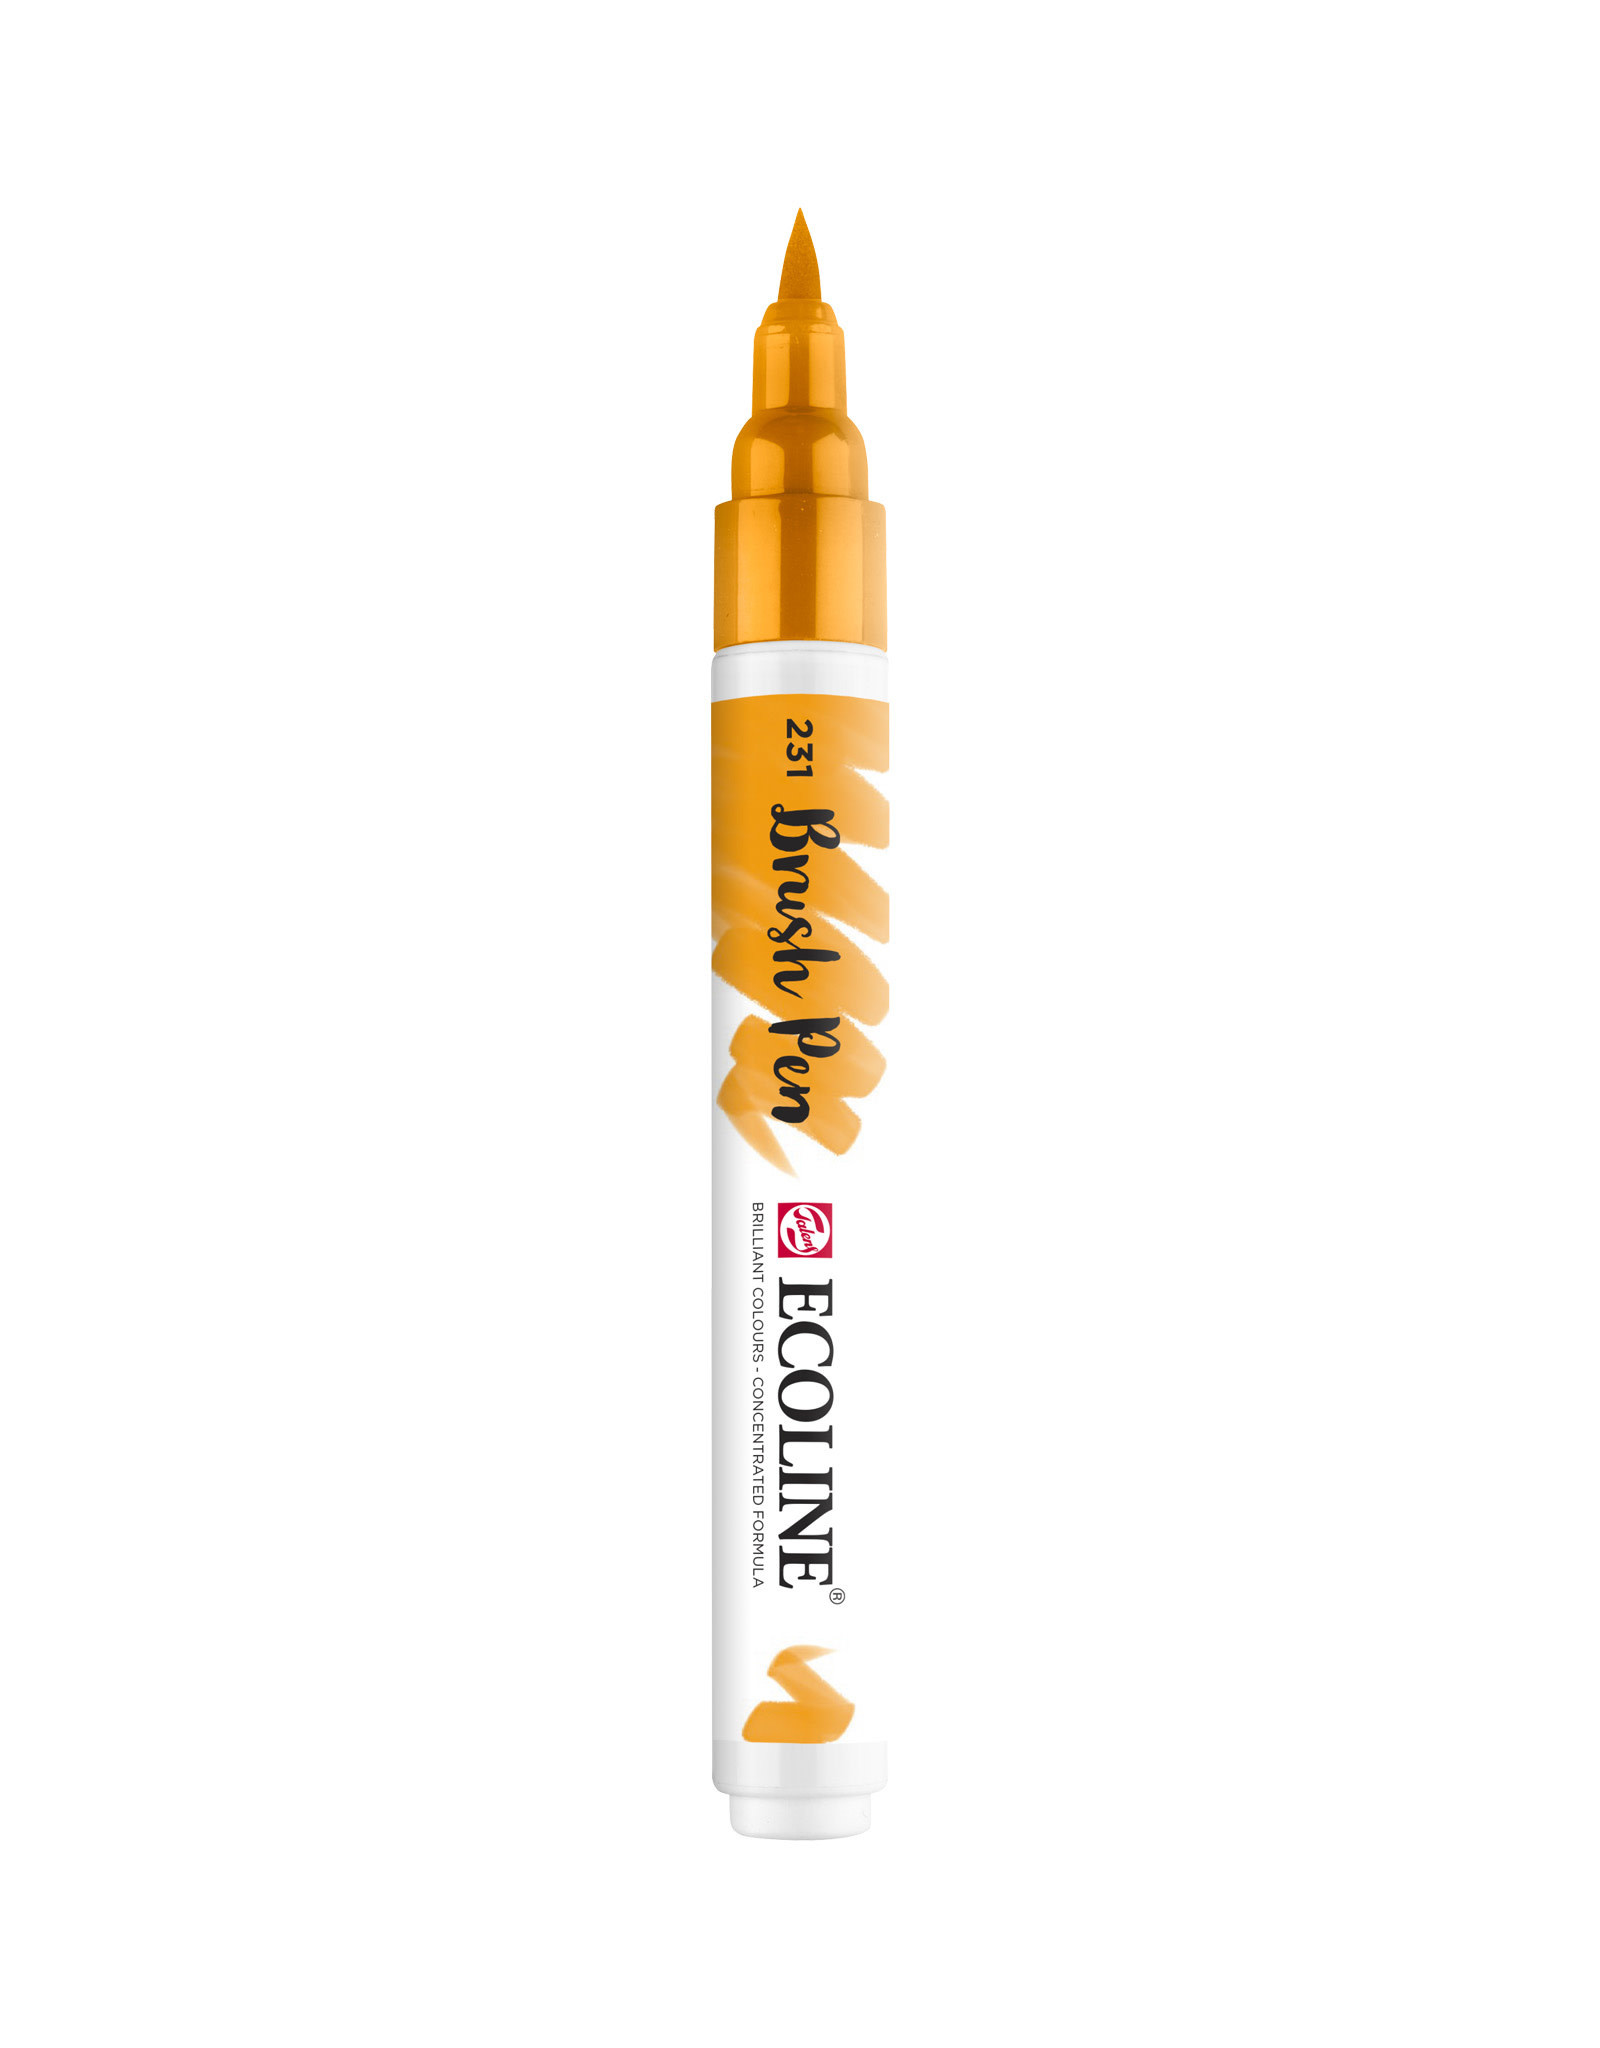 Royal Talens Ecoline Watercolour Brush Pen, Gold Ochre